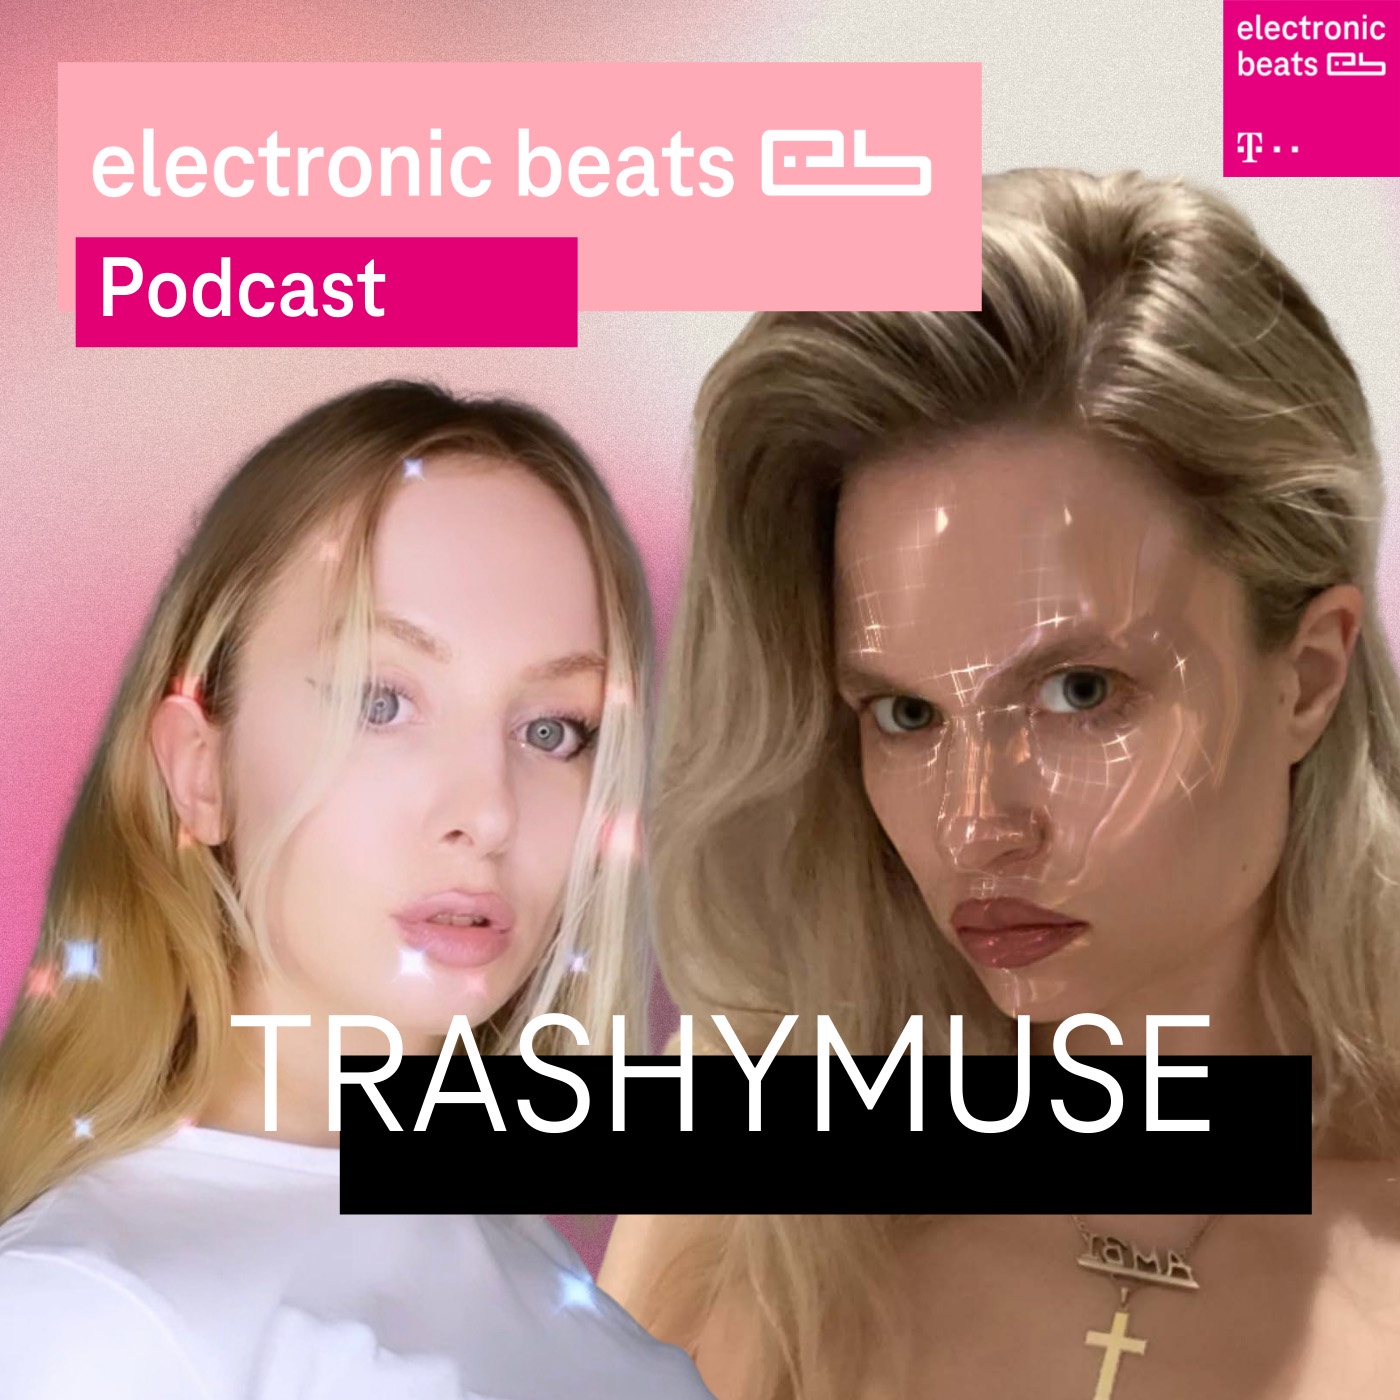 Trashymuse talk metaverse, digital fashion and immersive technology